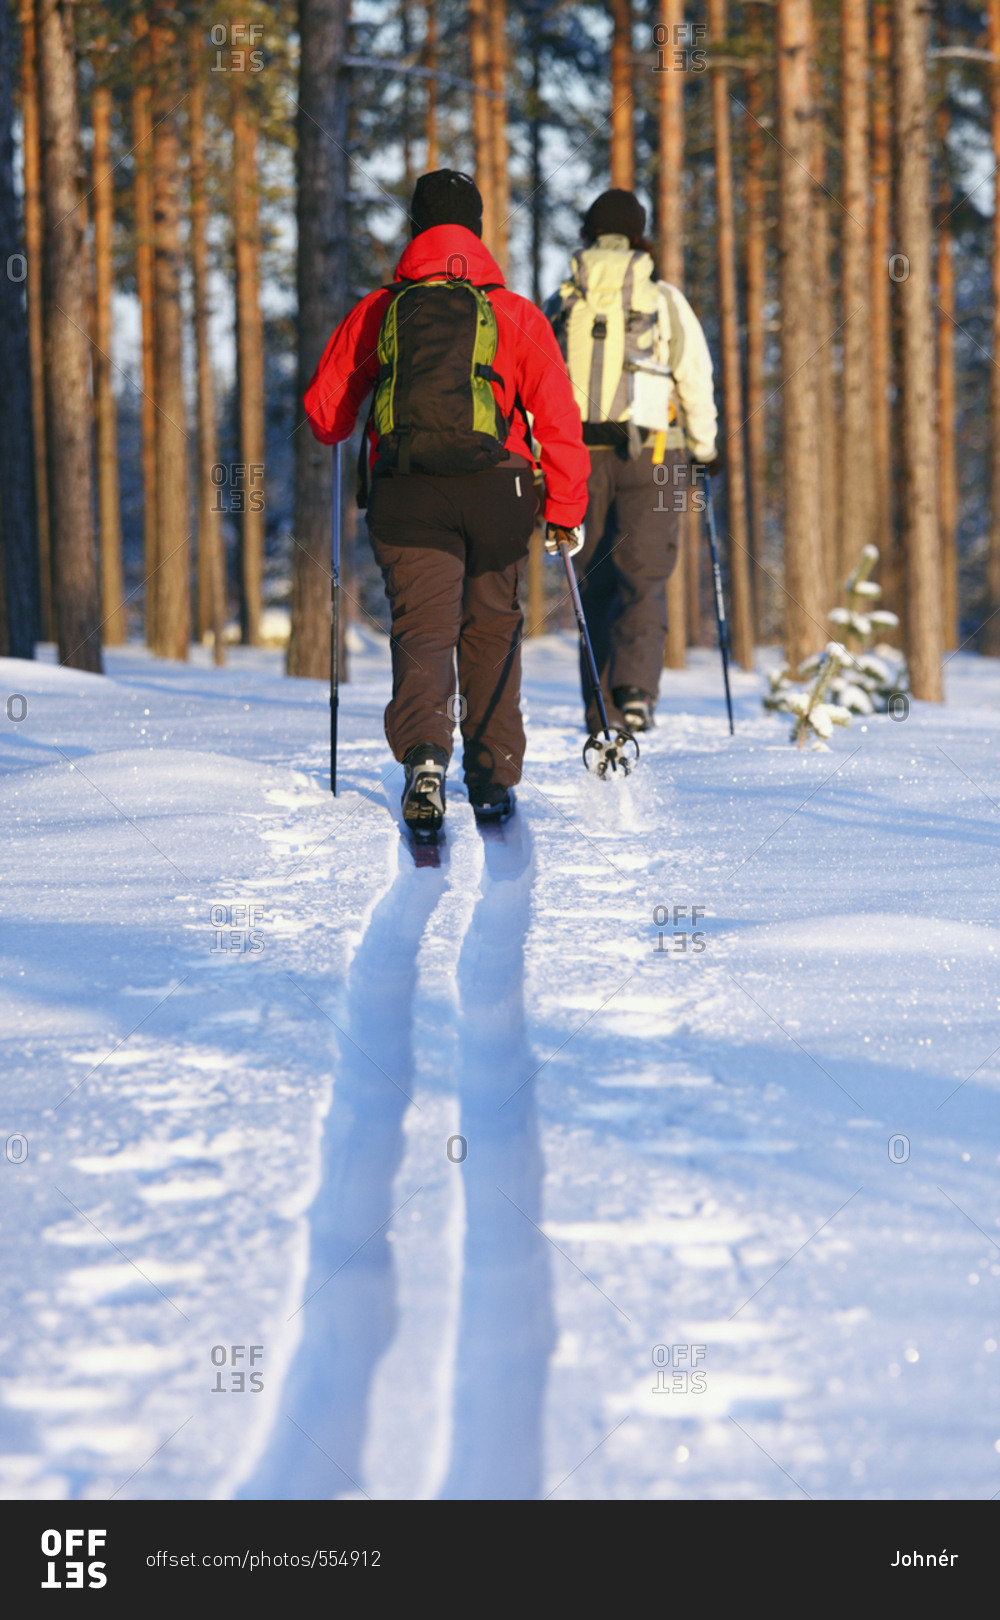 Women skiing in winter forest